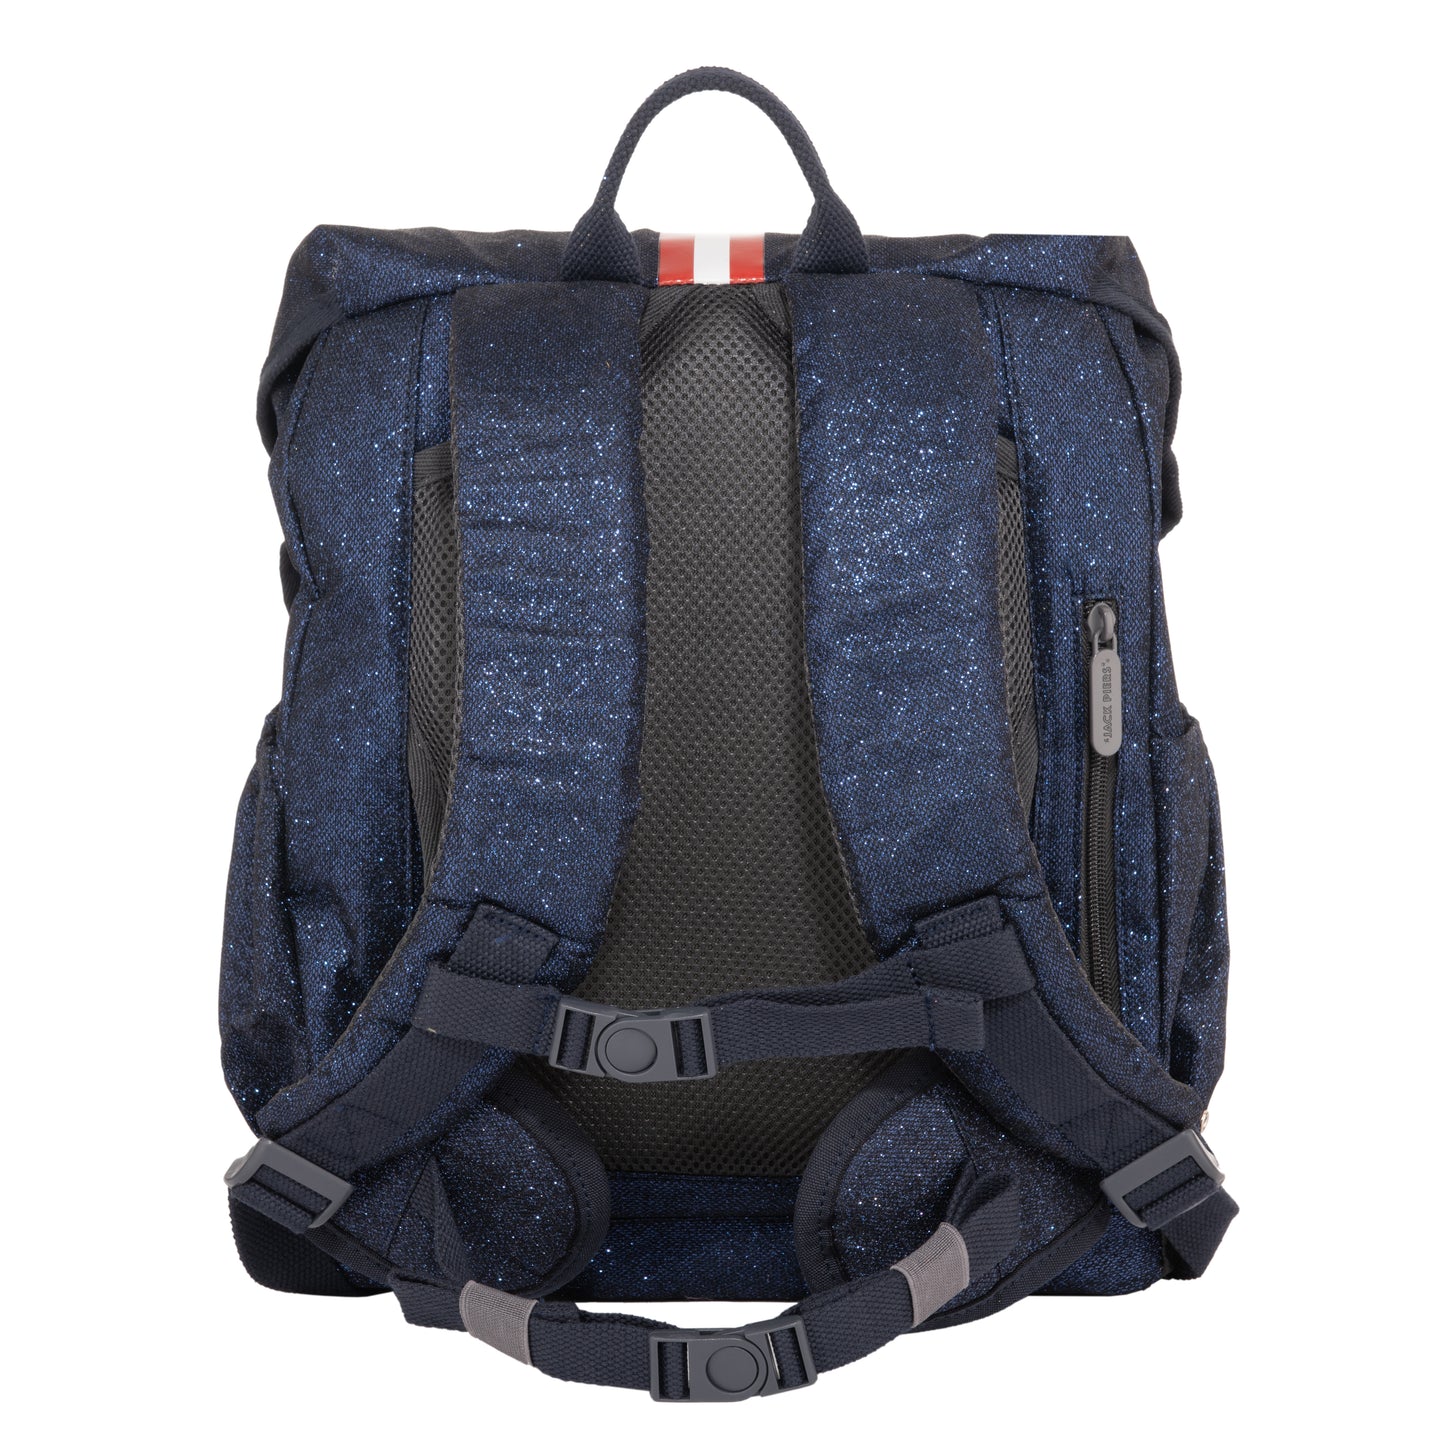 Jack Piers Rugzak/Backpack Berlin Aloha - 36x13x29cm - Blauw